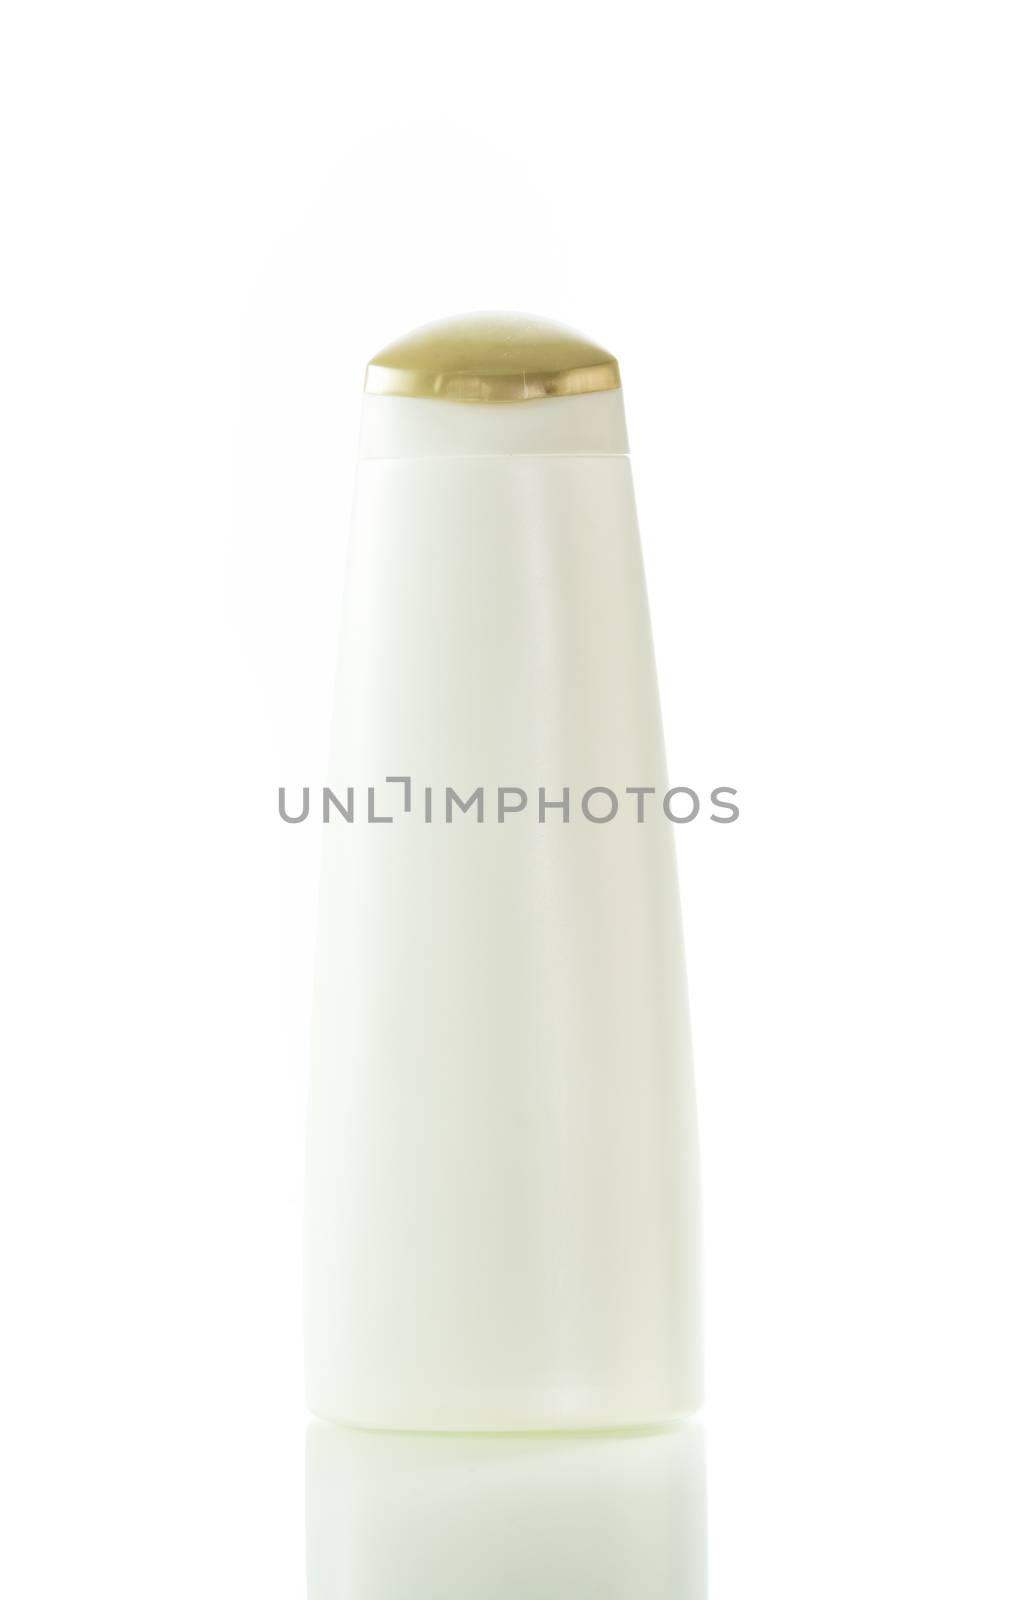 Shampoo, gel or lotion white plastic bottle isolated on over white background